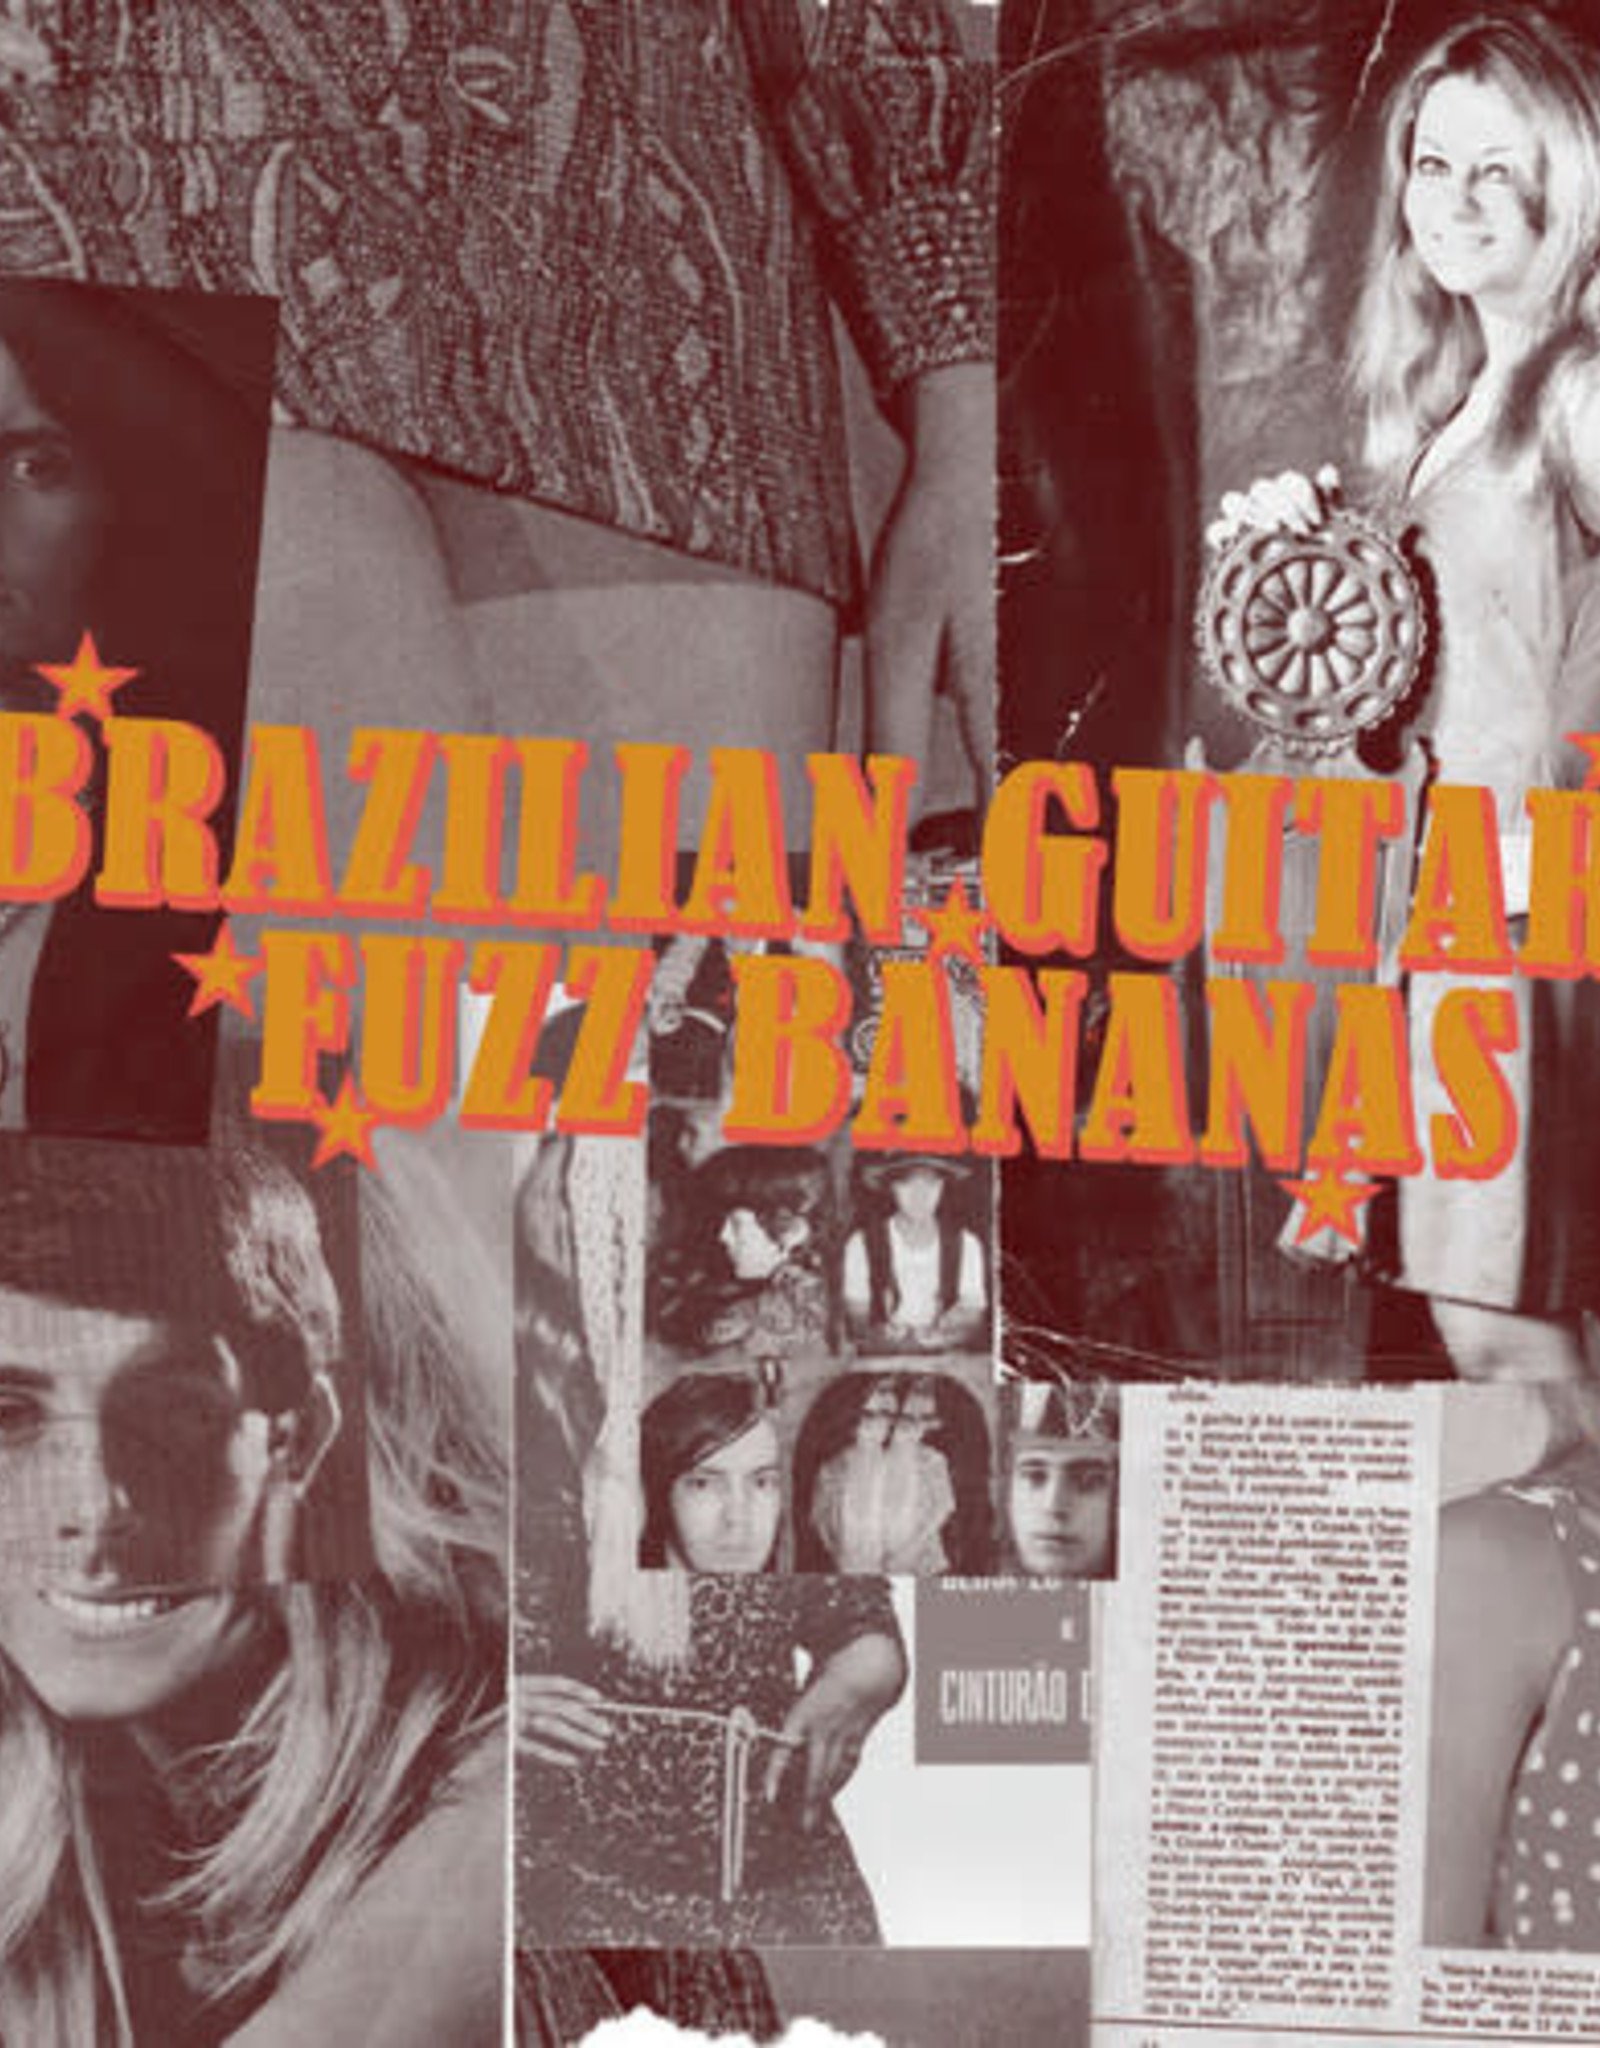 Brazilian Guitar Fuzz Bananas: Tropicalista Psychedelic Masterpieces